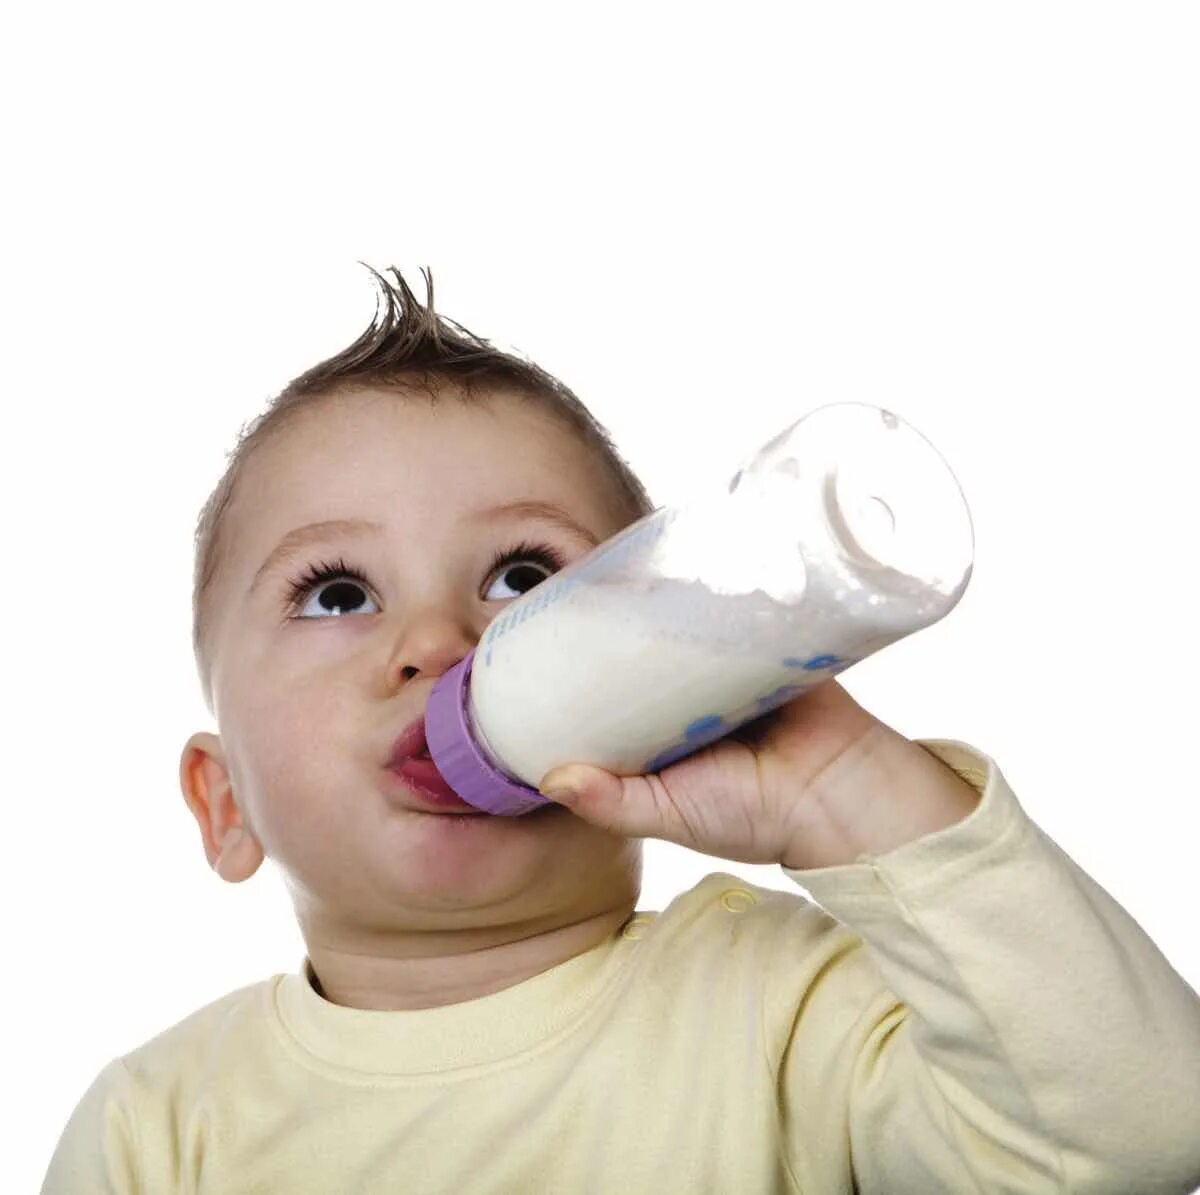 Дети пьют из бутылки. Малыш пьет молоко. Малыш с бутылочкой молока. Молоко для детей. Ребенок пьет молоко.